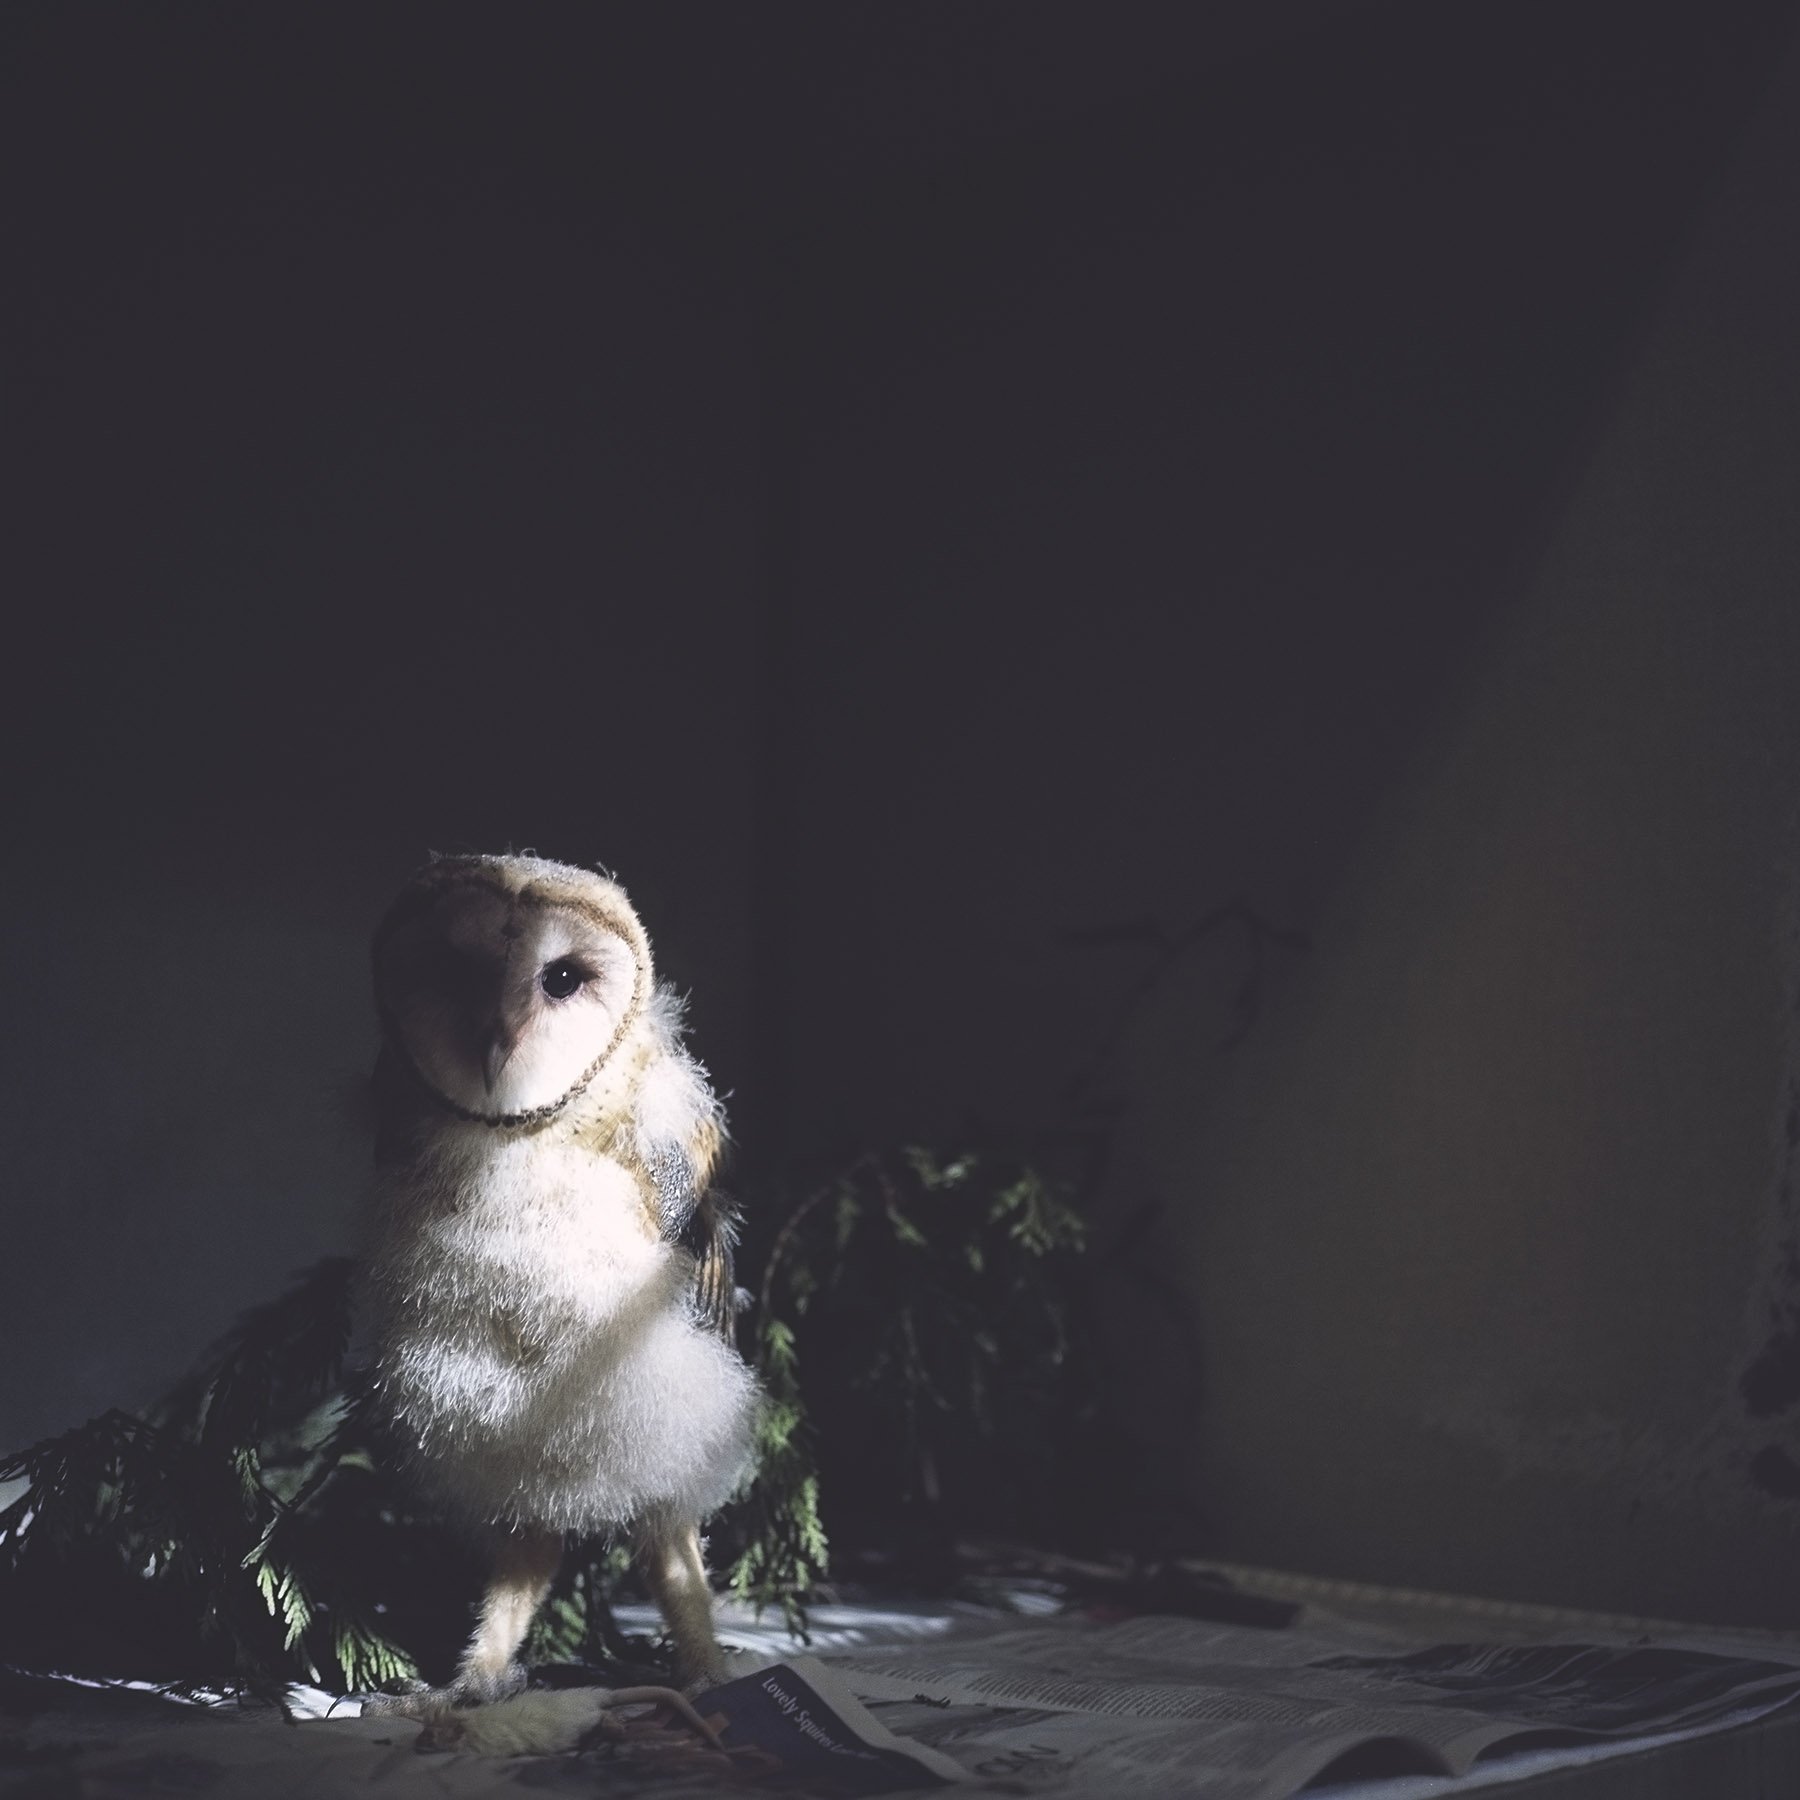 Juvenile Barn Owl-Finding Trust Series